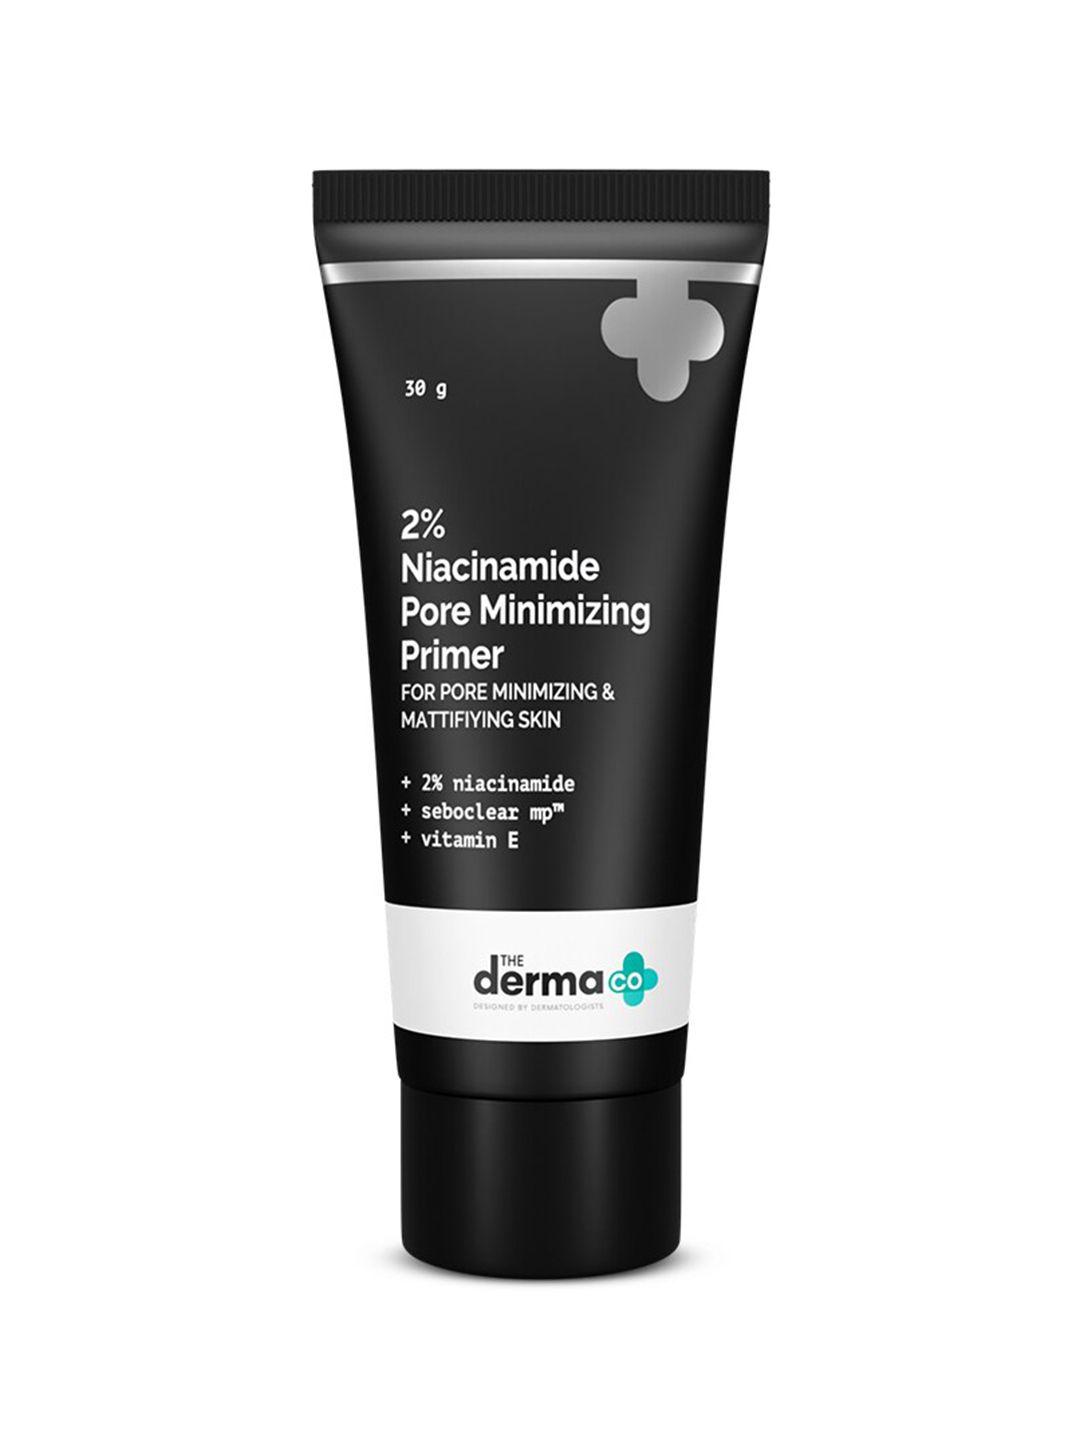 the derma co. 2% niacinamide pore minimizing mattifying primer with vitamin e 30 g